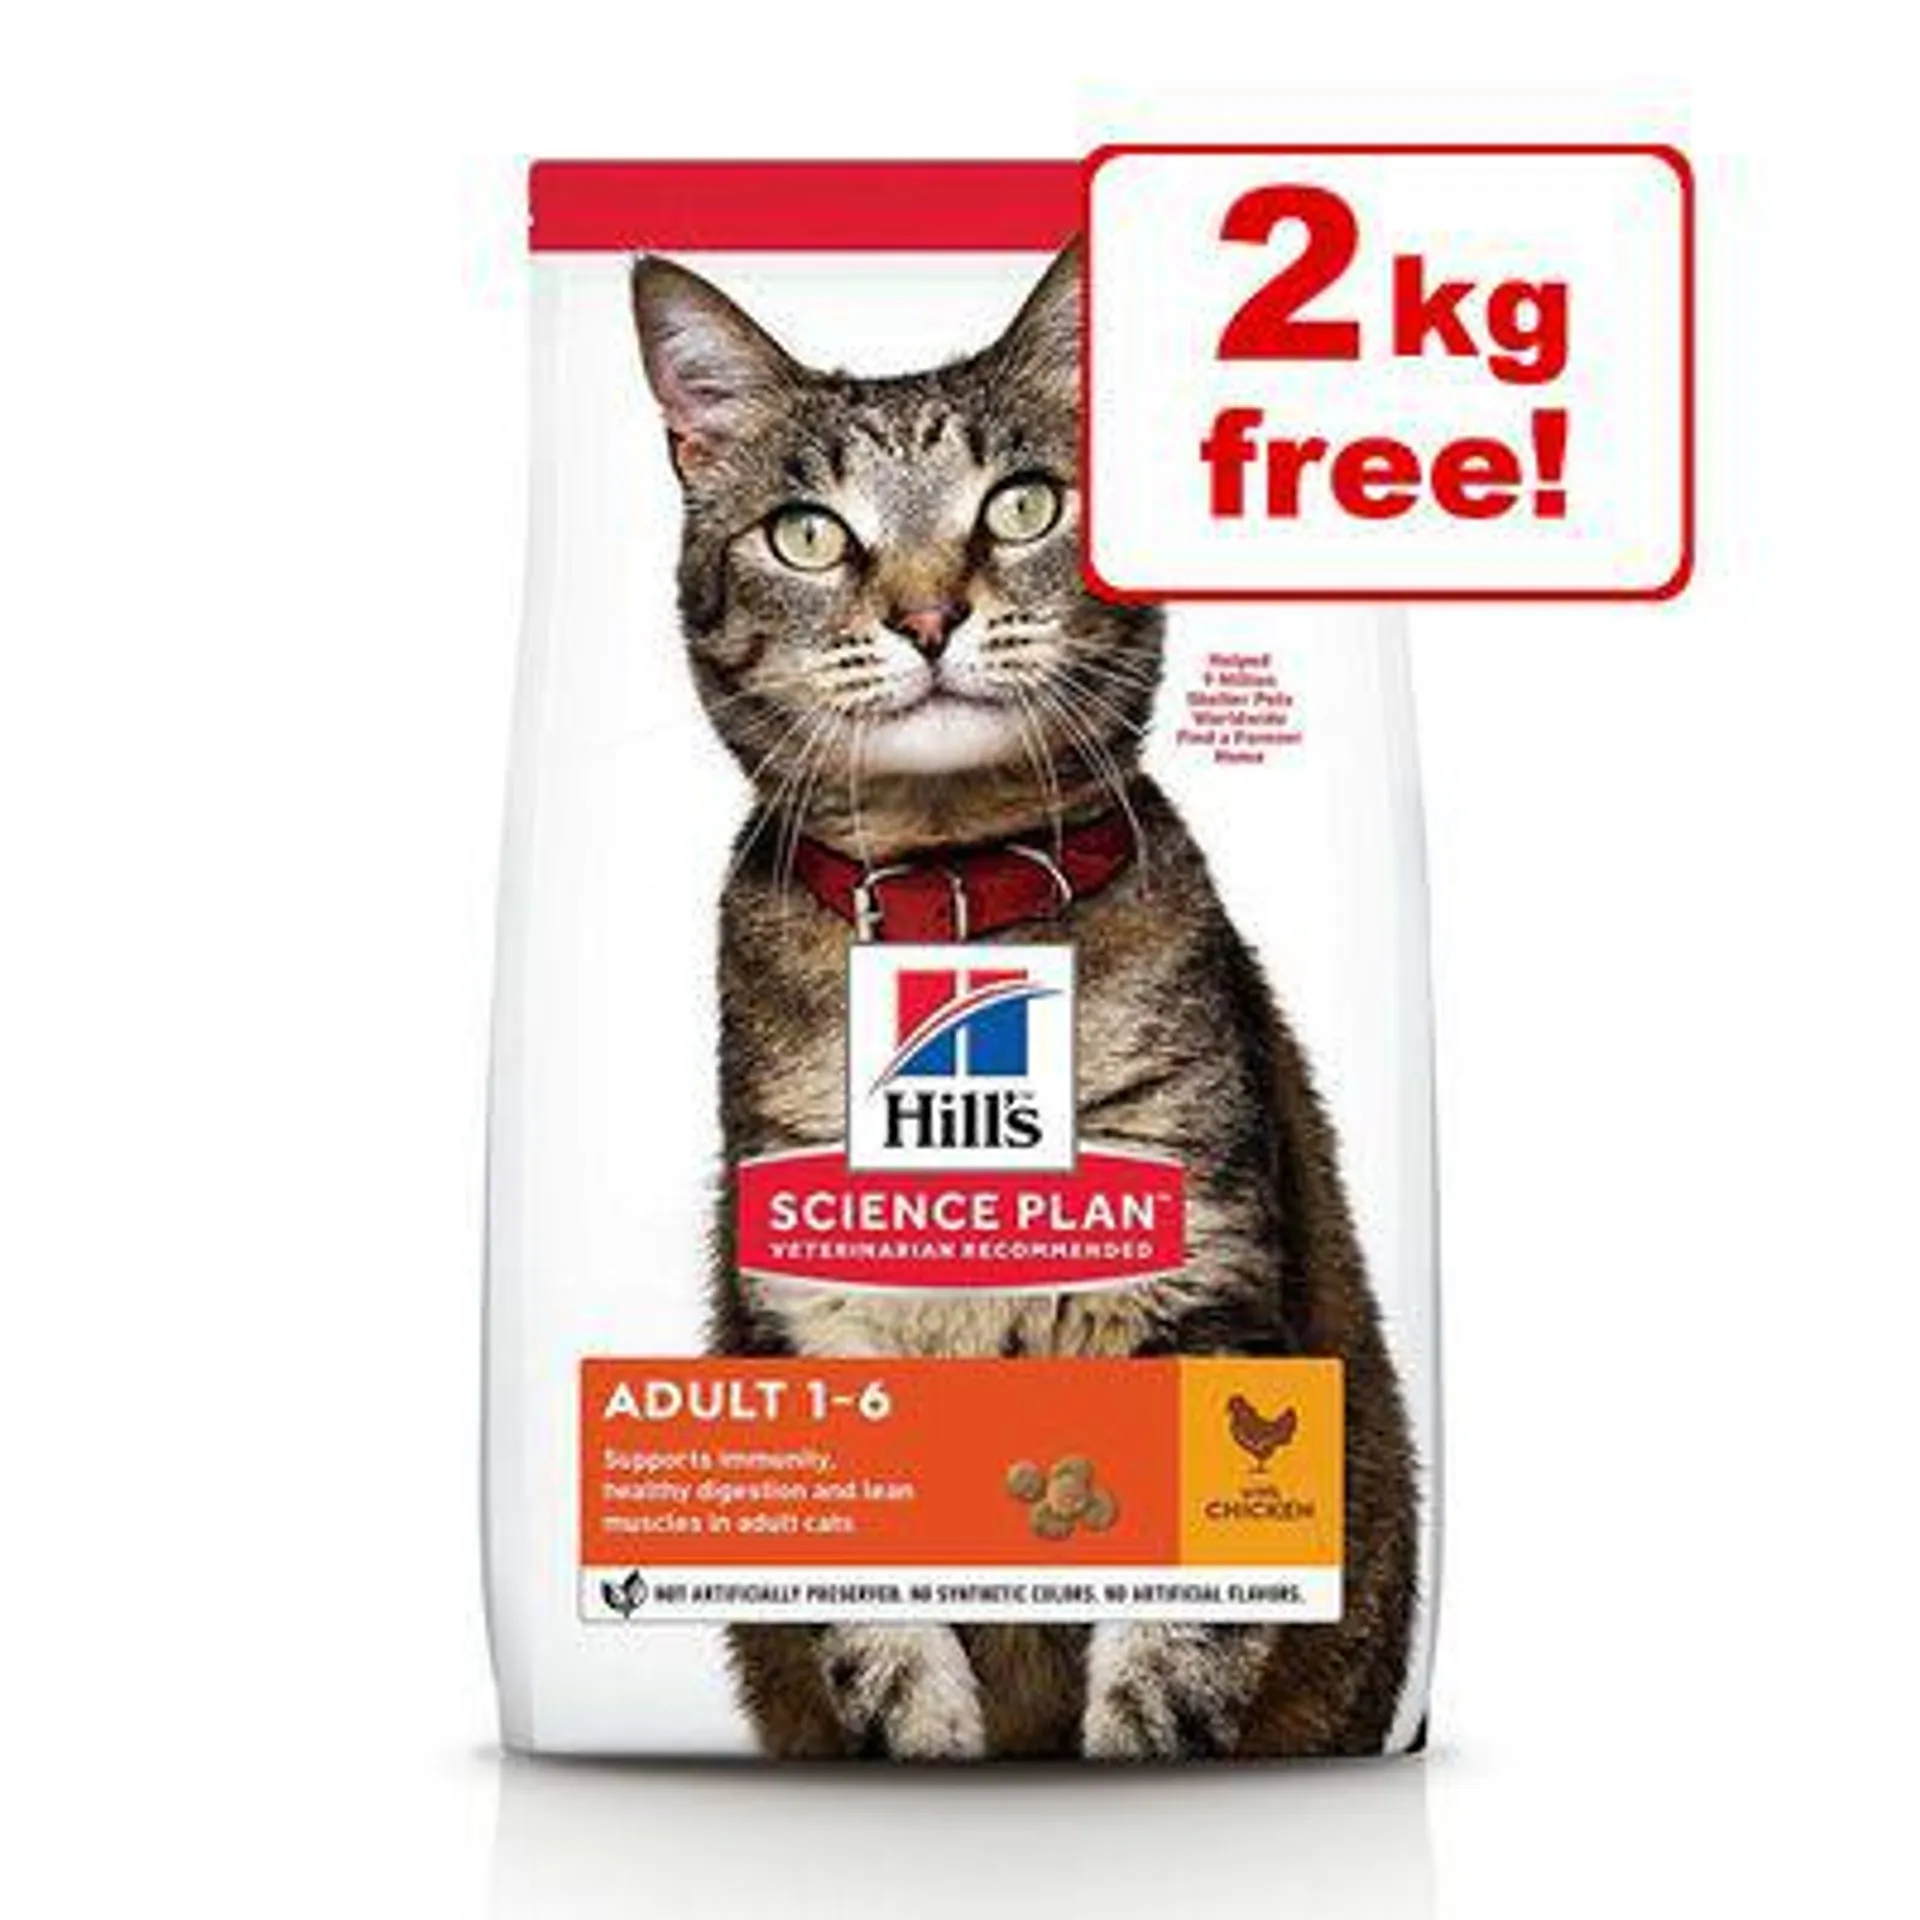 10kg Hill's Science Plan Dry Cat Food - 8kg + 2kg Free! *